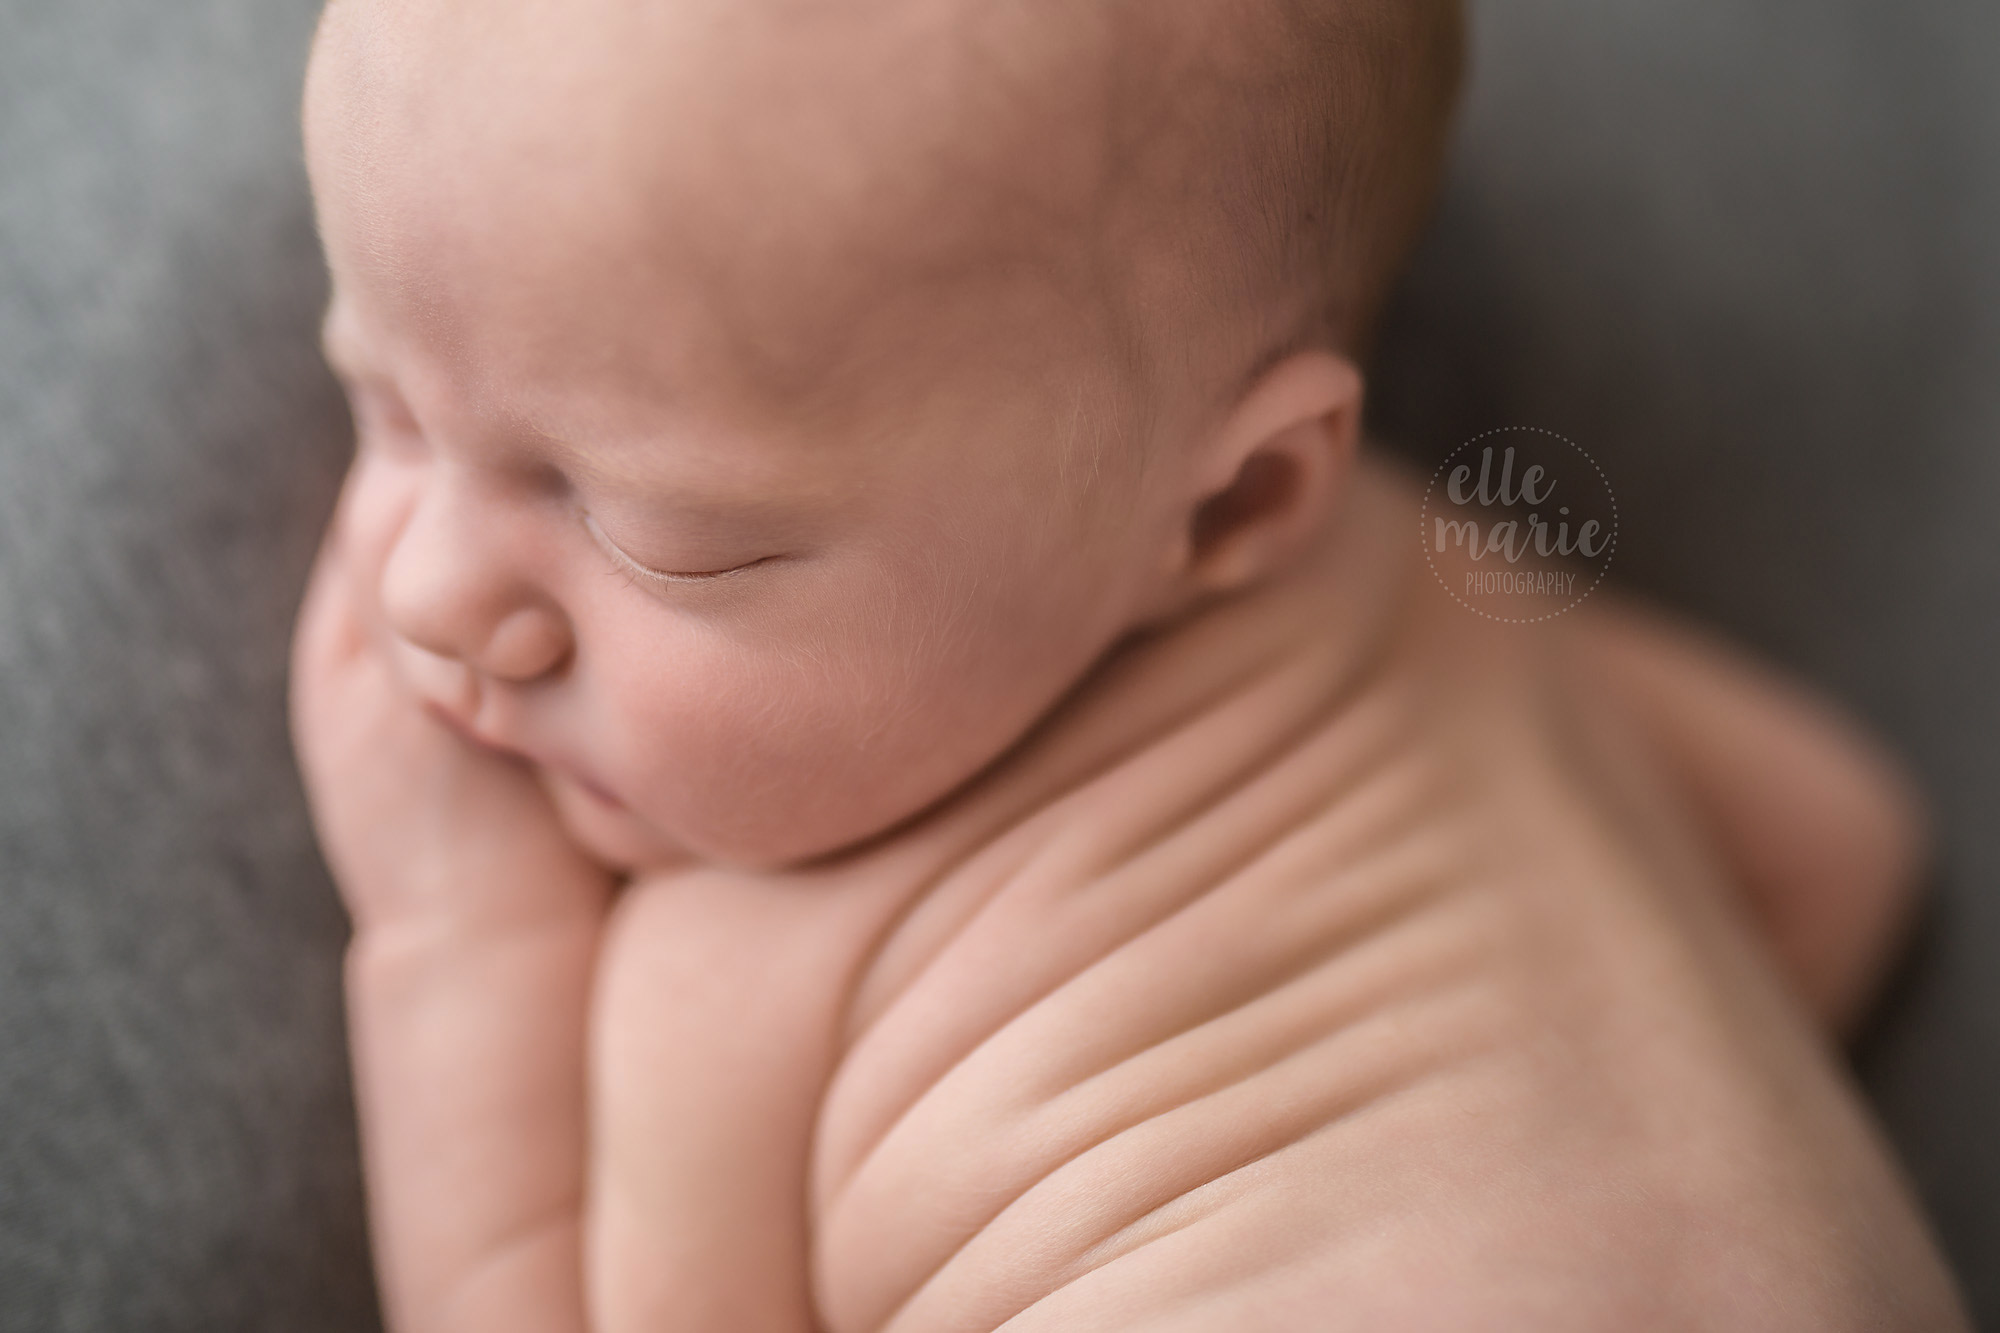 newborn baby close up